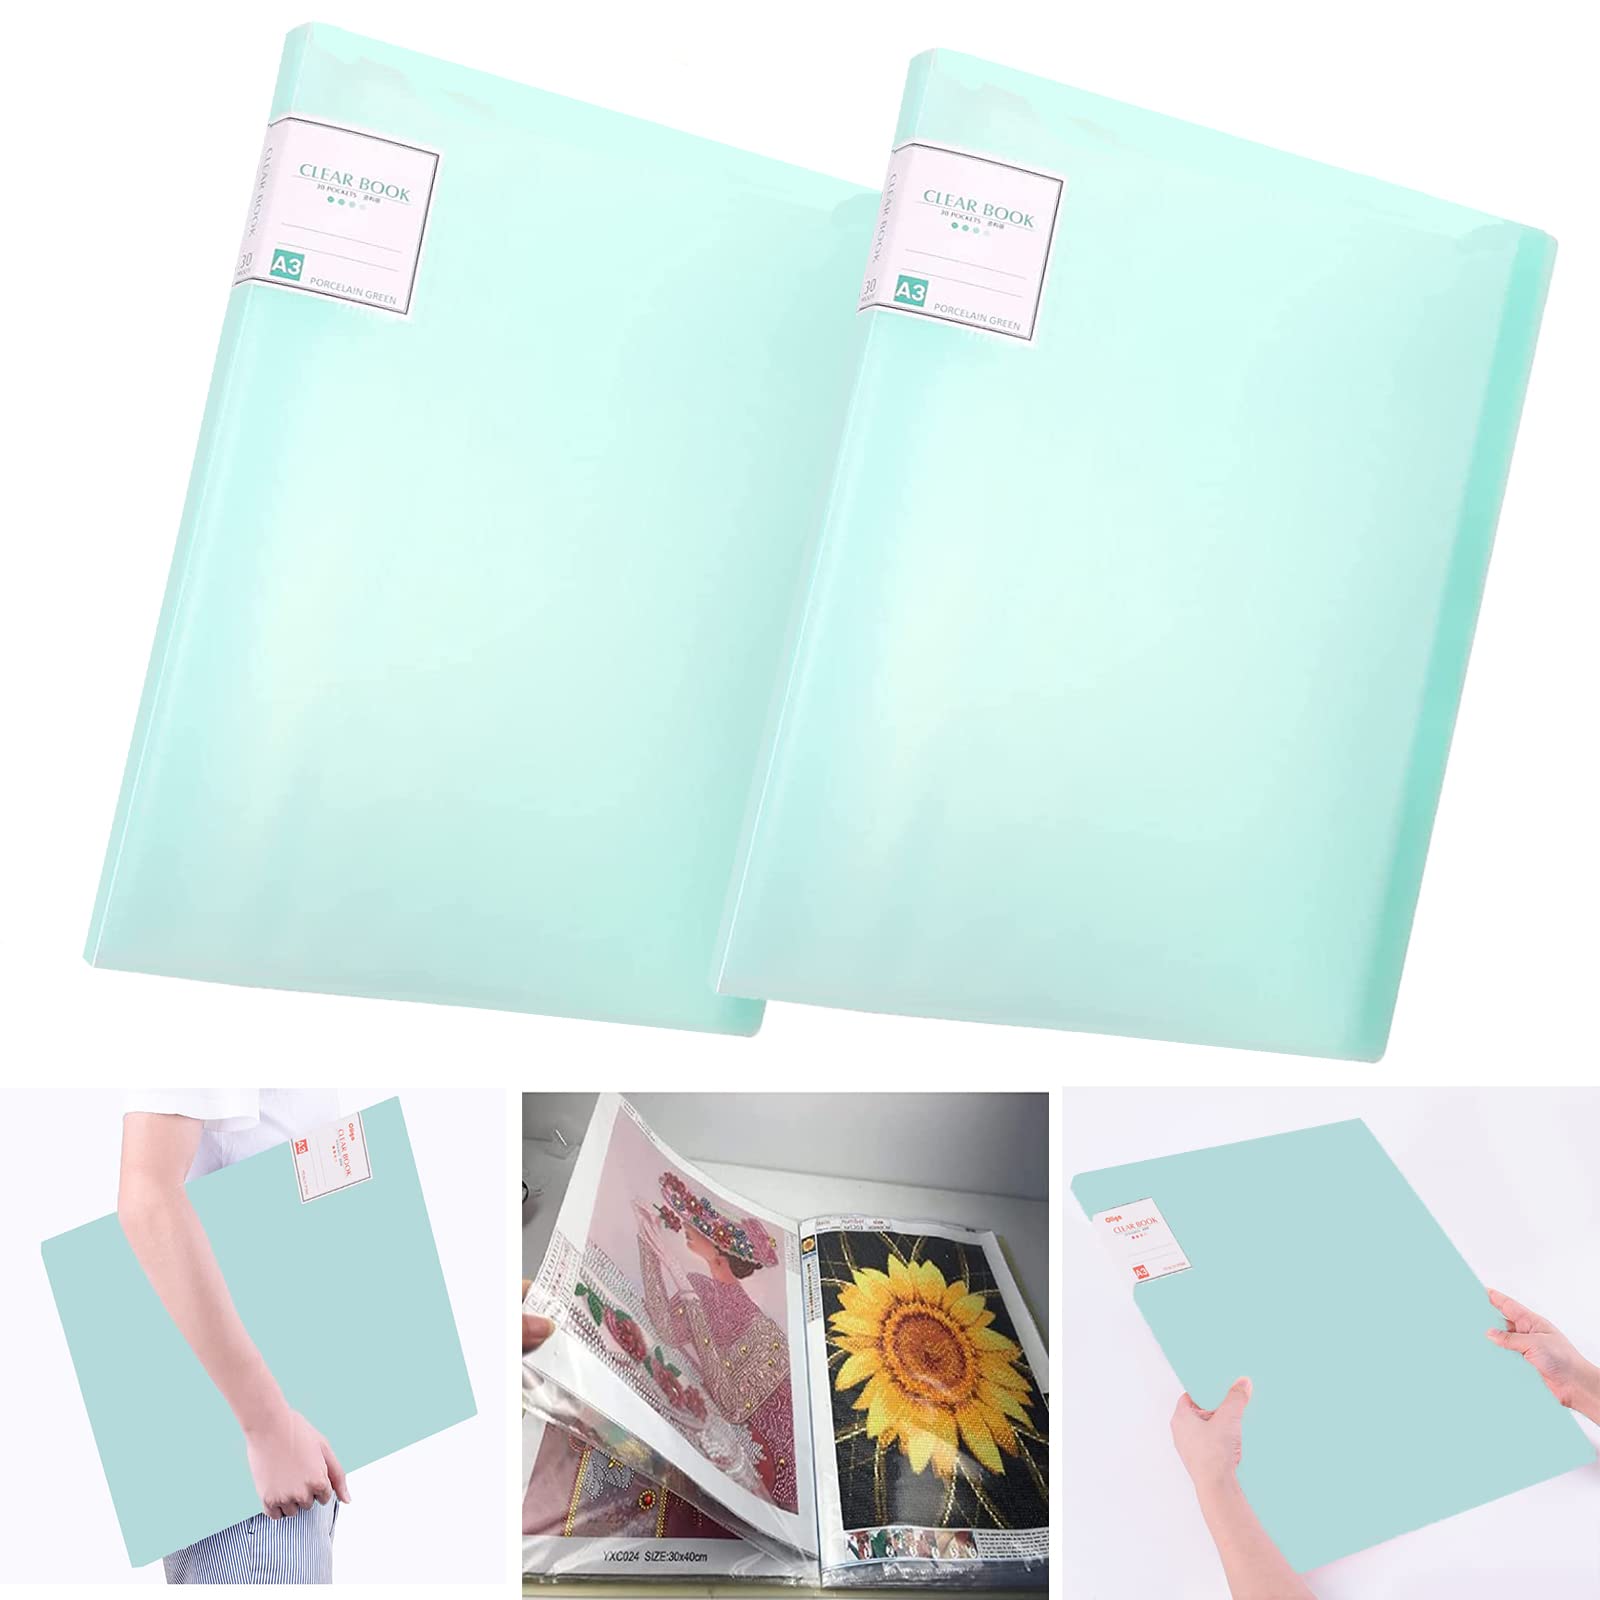 Diamond Painting Storage Book A3 A4 Folder Storage Bag Information